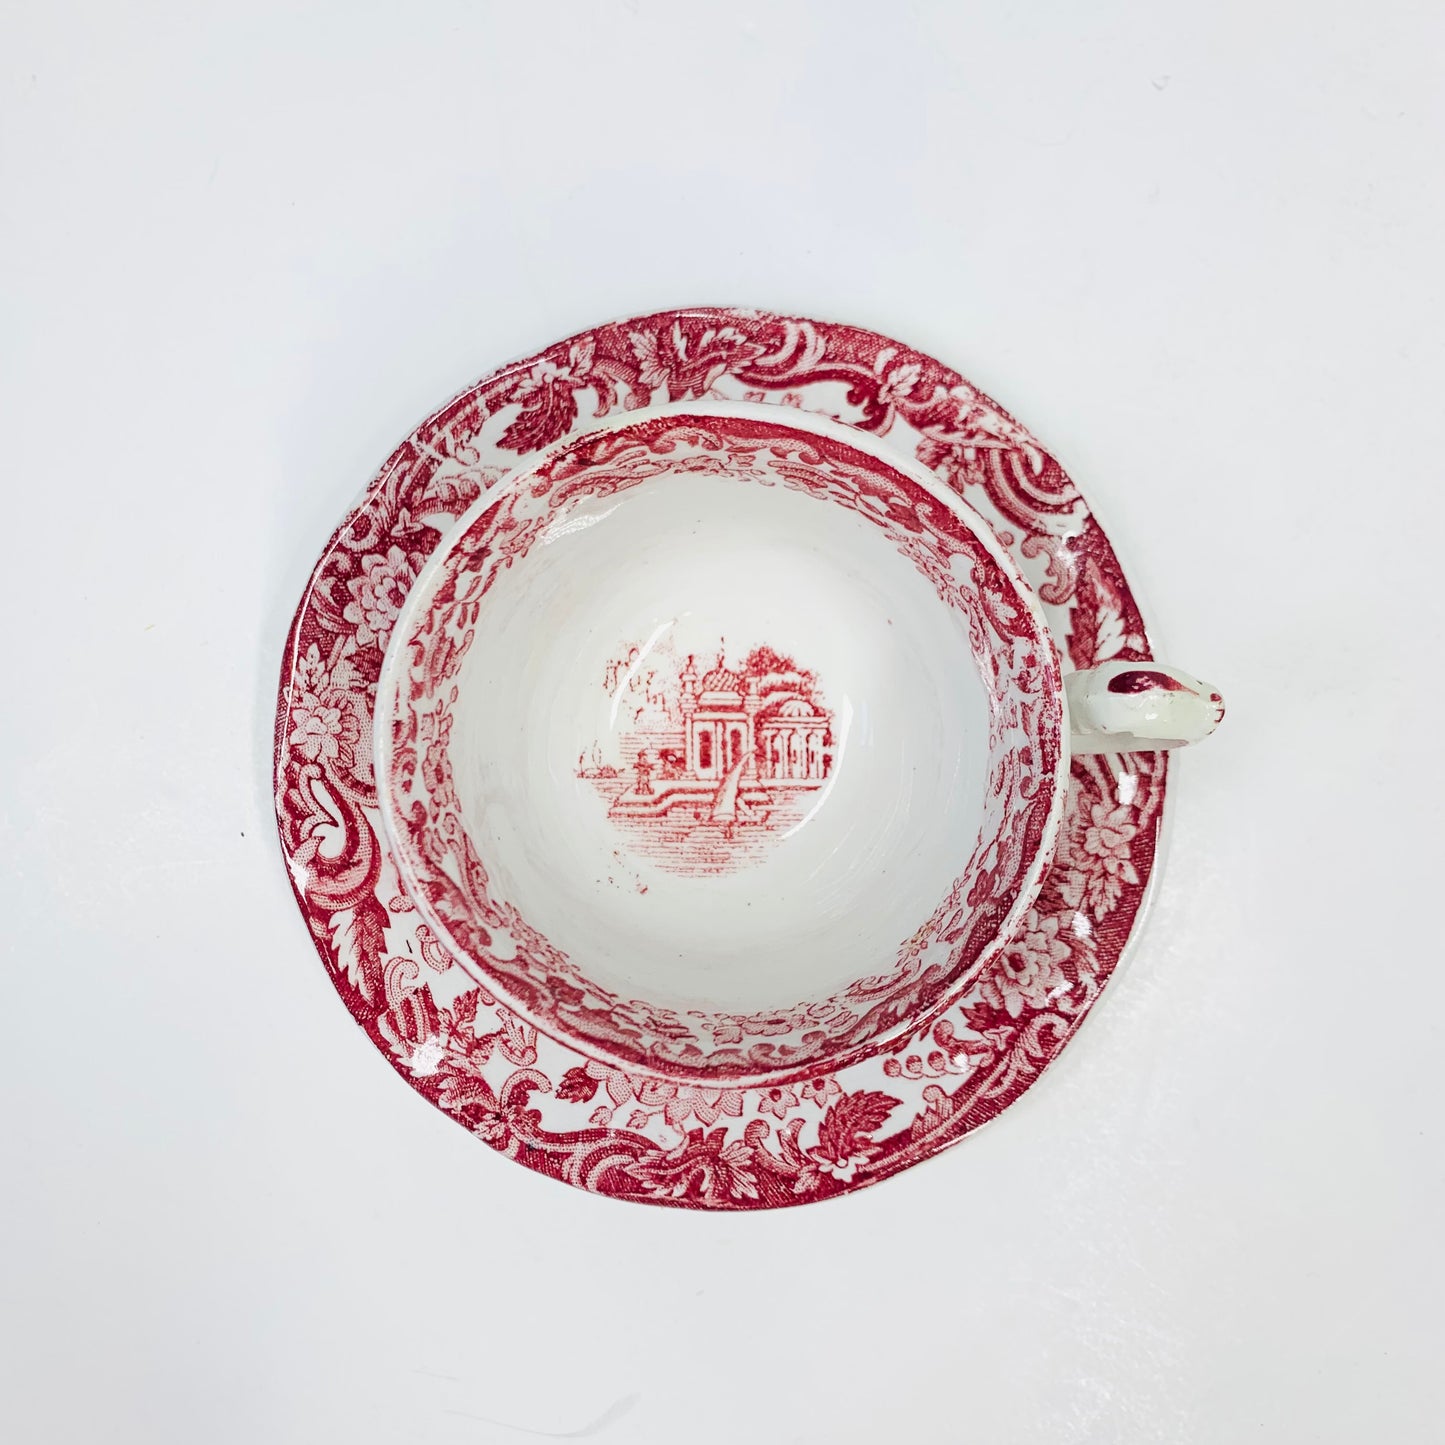 Extremely rare antique Pickman La Cartuja De Sevilla Transferware  red printed porcelain tea set